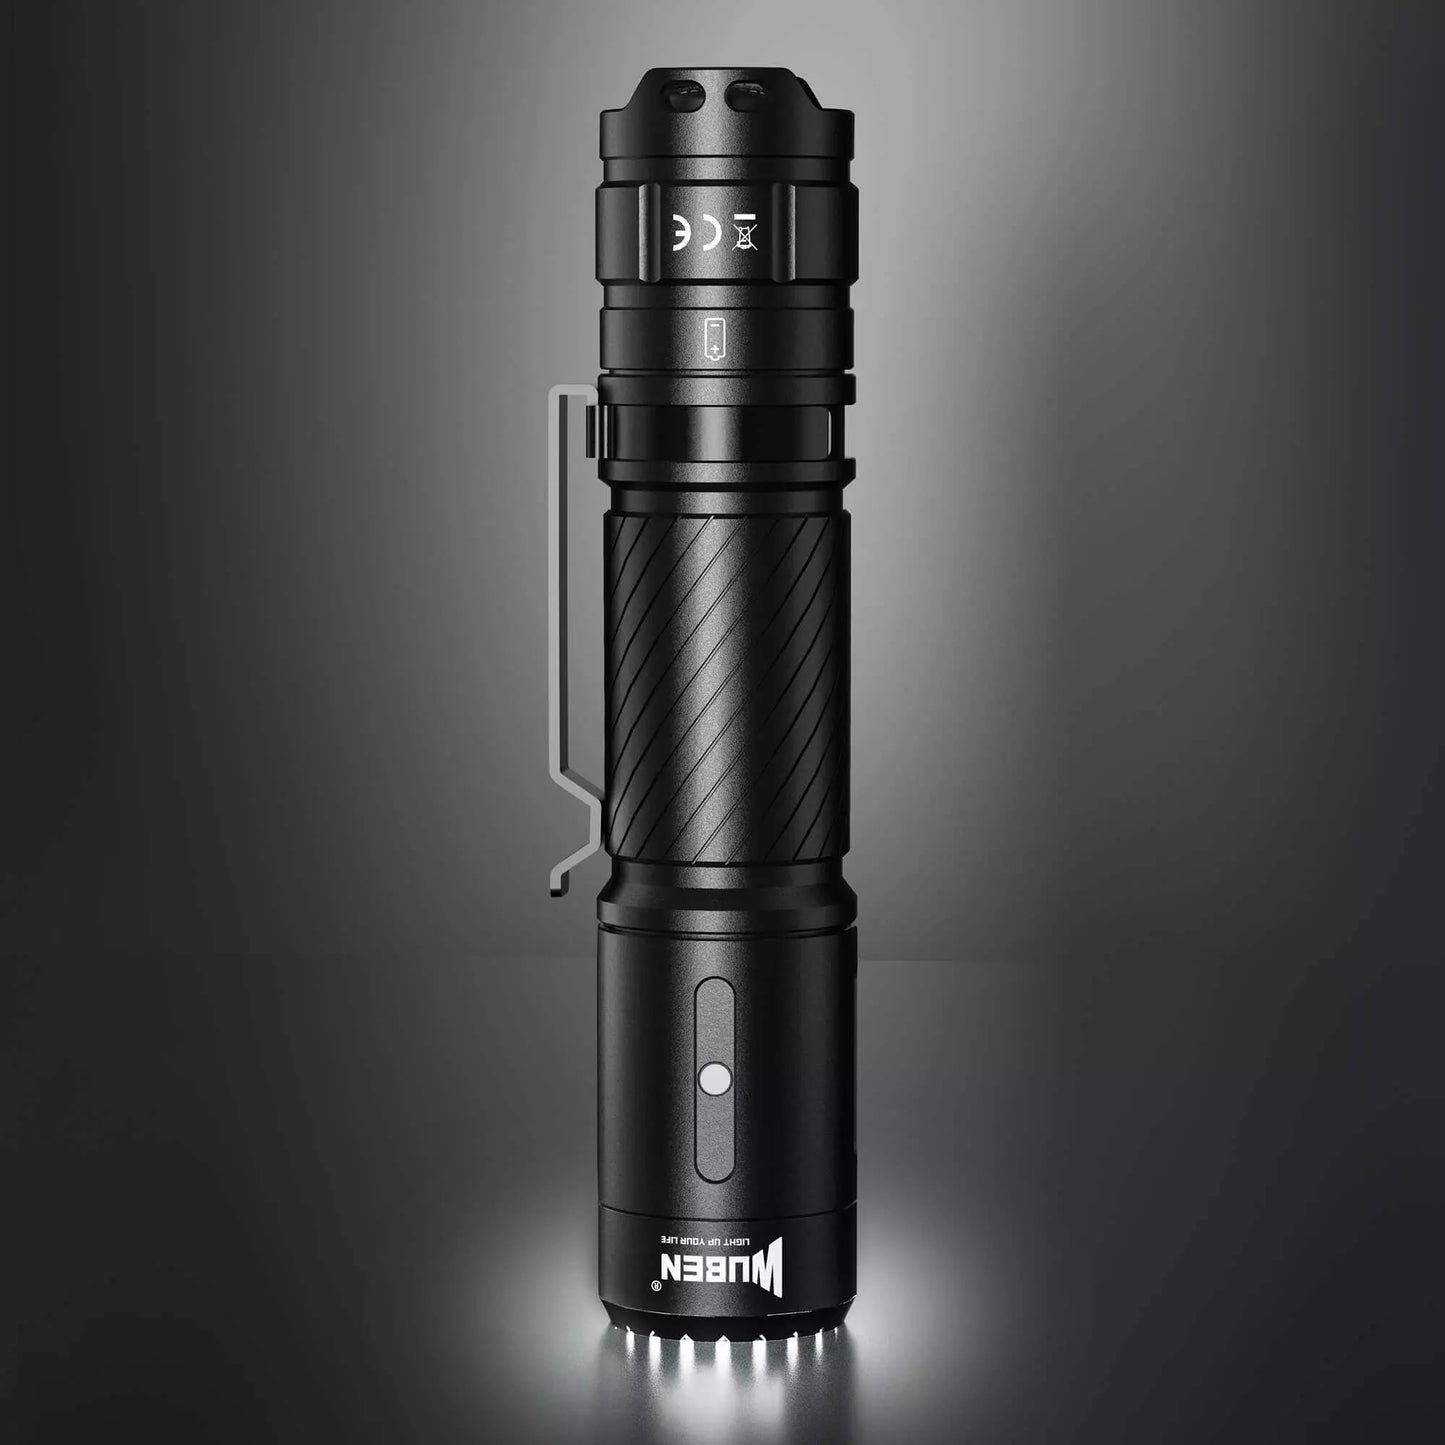 Wuben C3 1200 Lumen USB-C Rechargeable Compact Flashlight